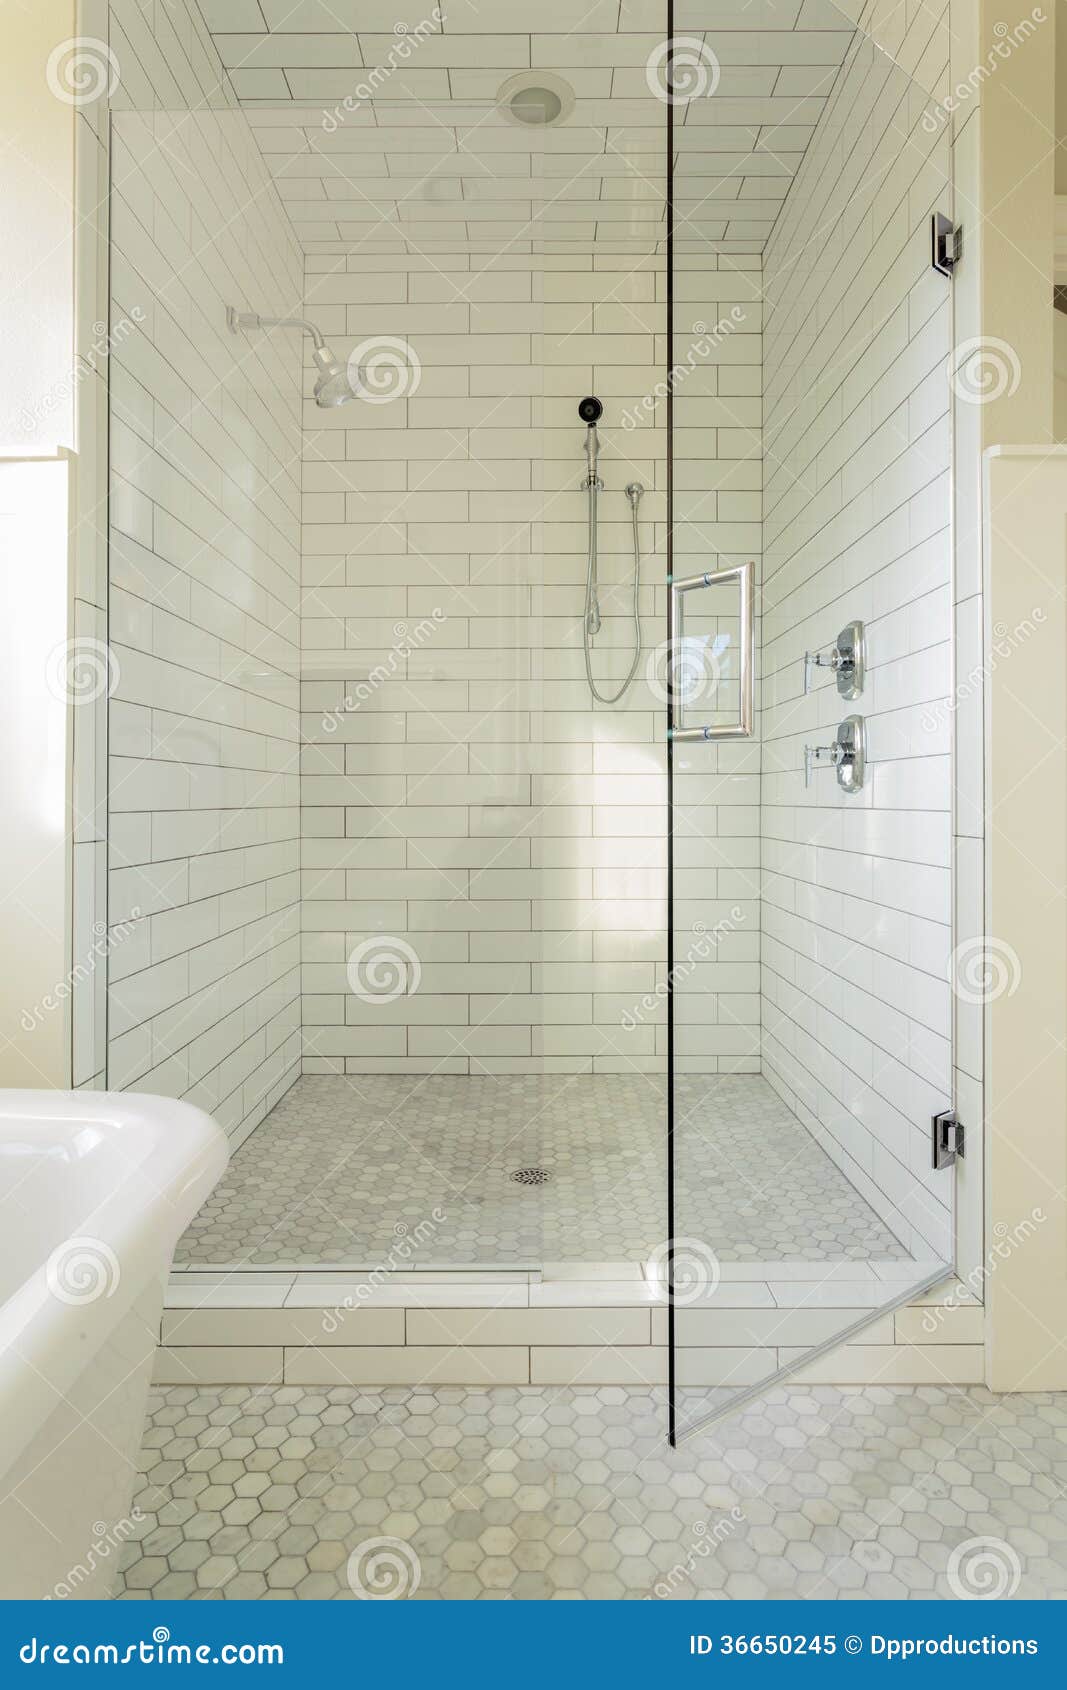 master bathroom shower